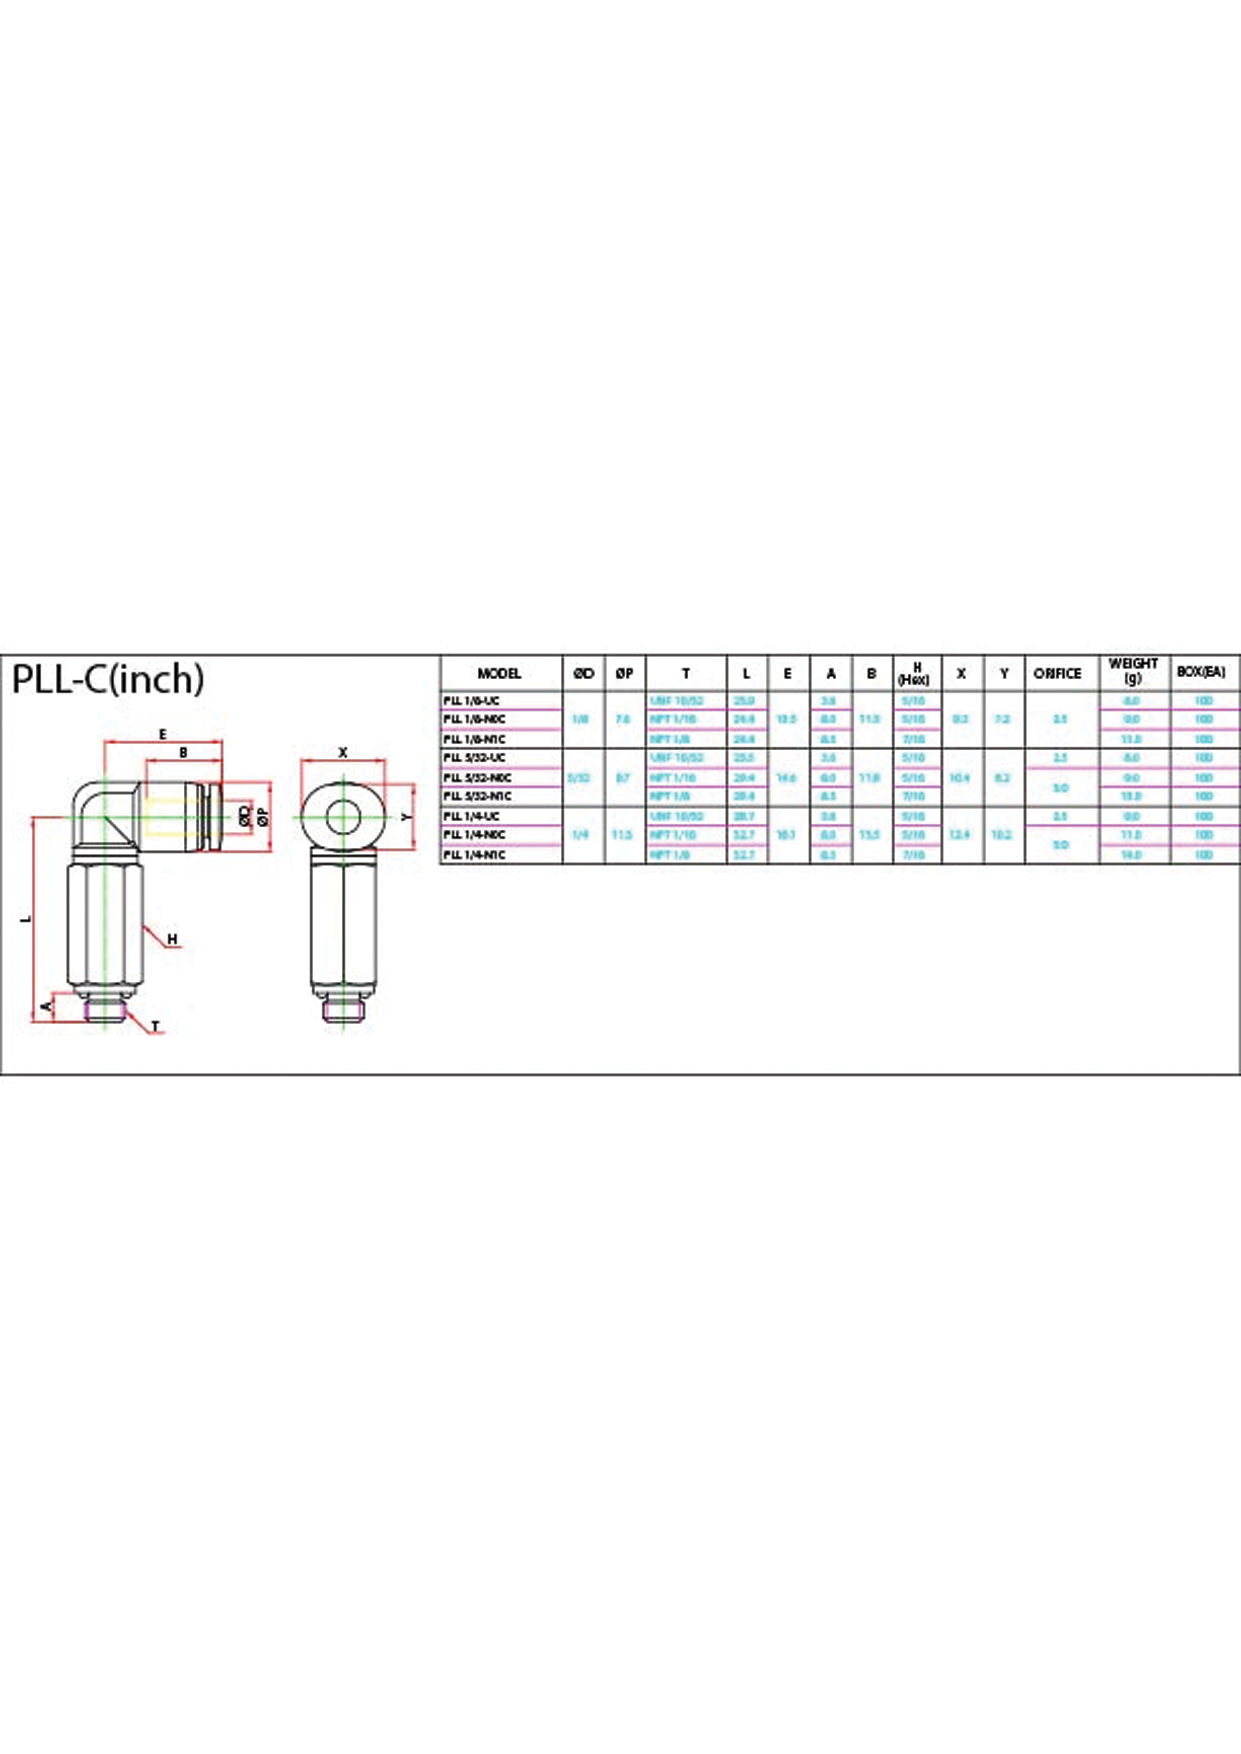 PLL-C (Inch) Data Sheet ( 108 KB )